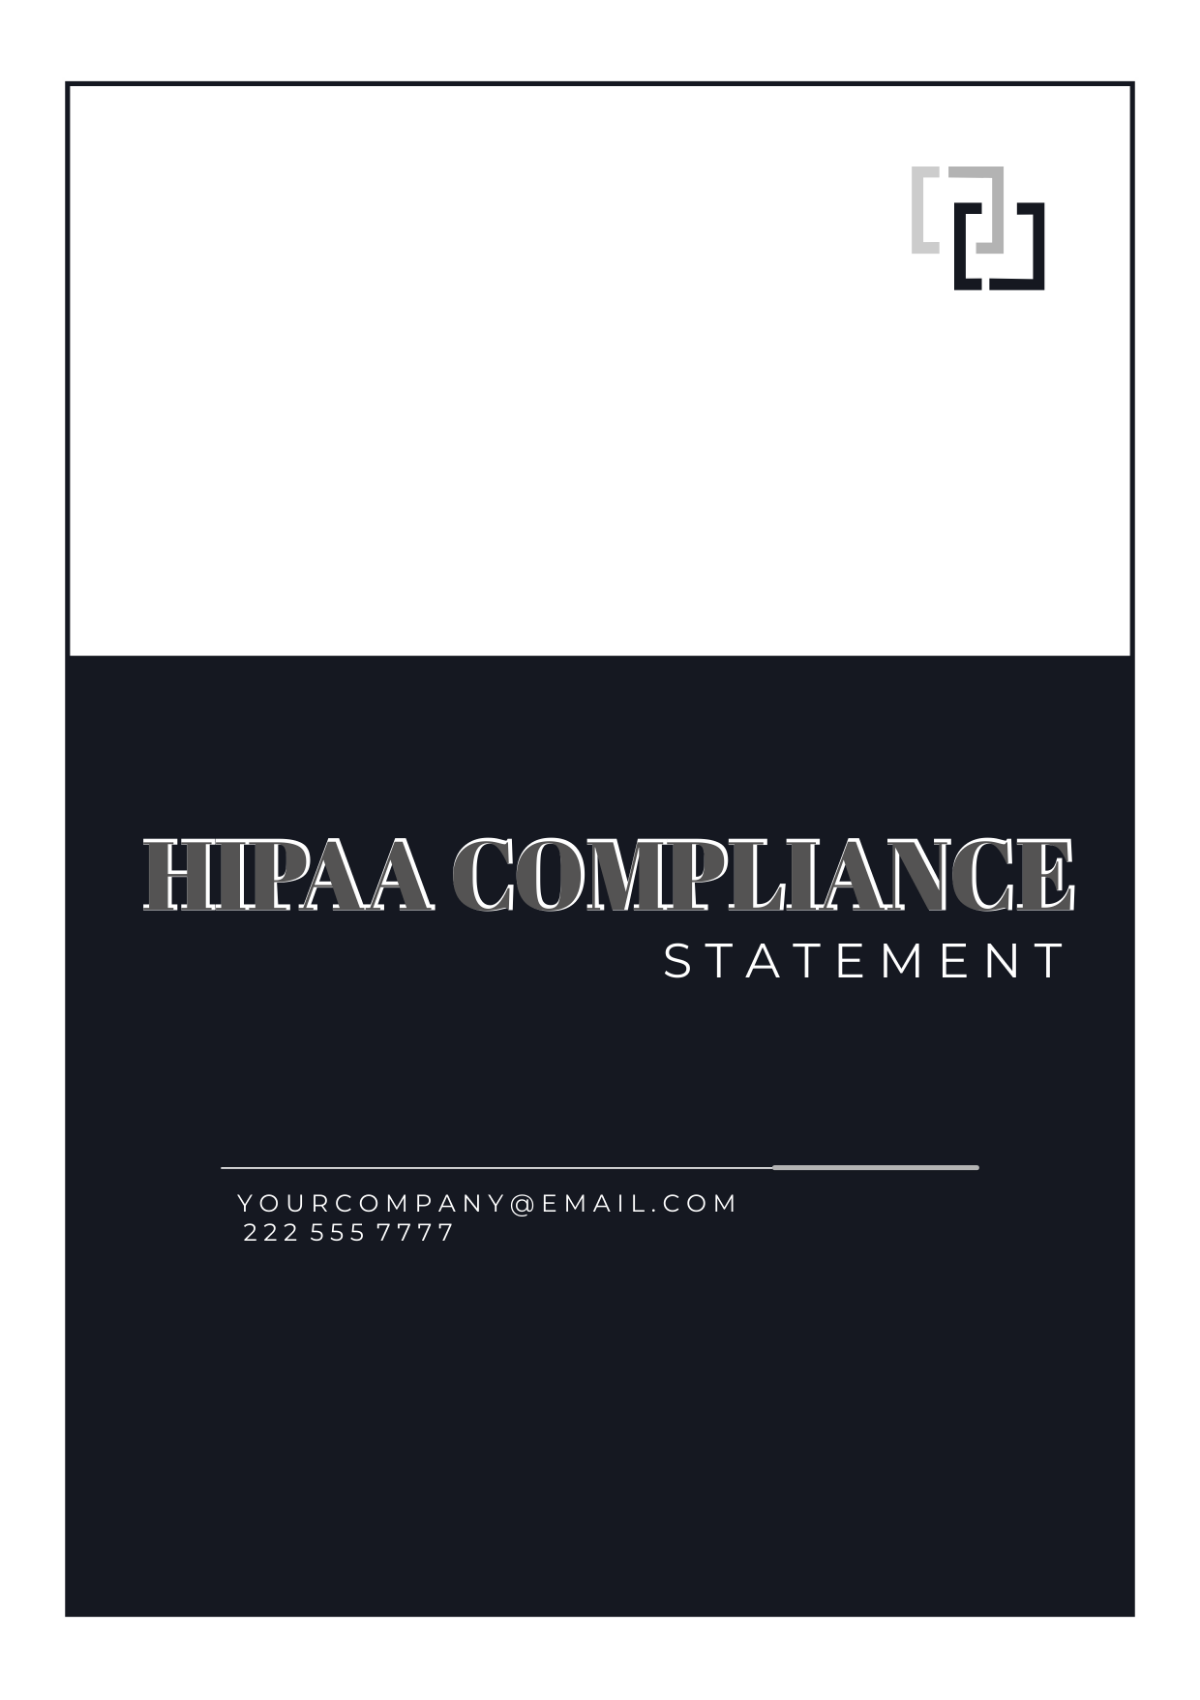 HIPAA Compliance Statement Template